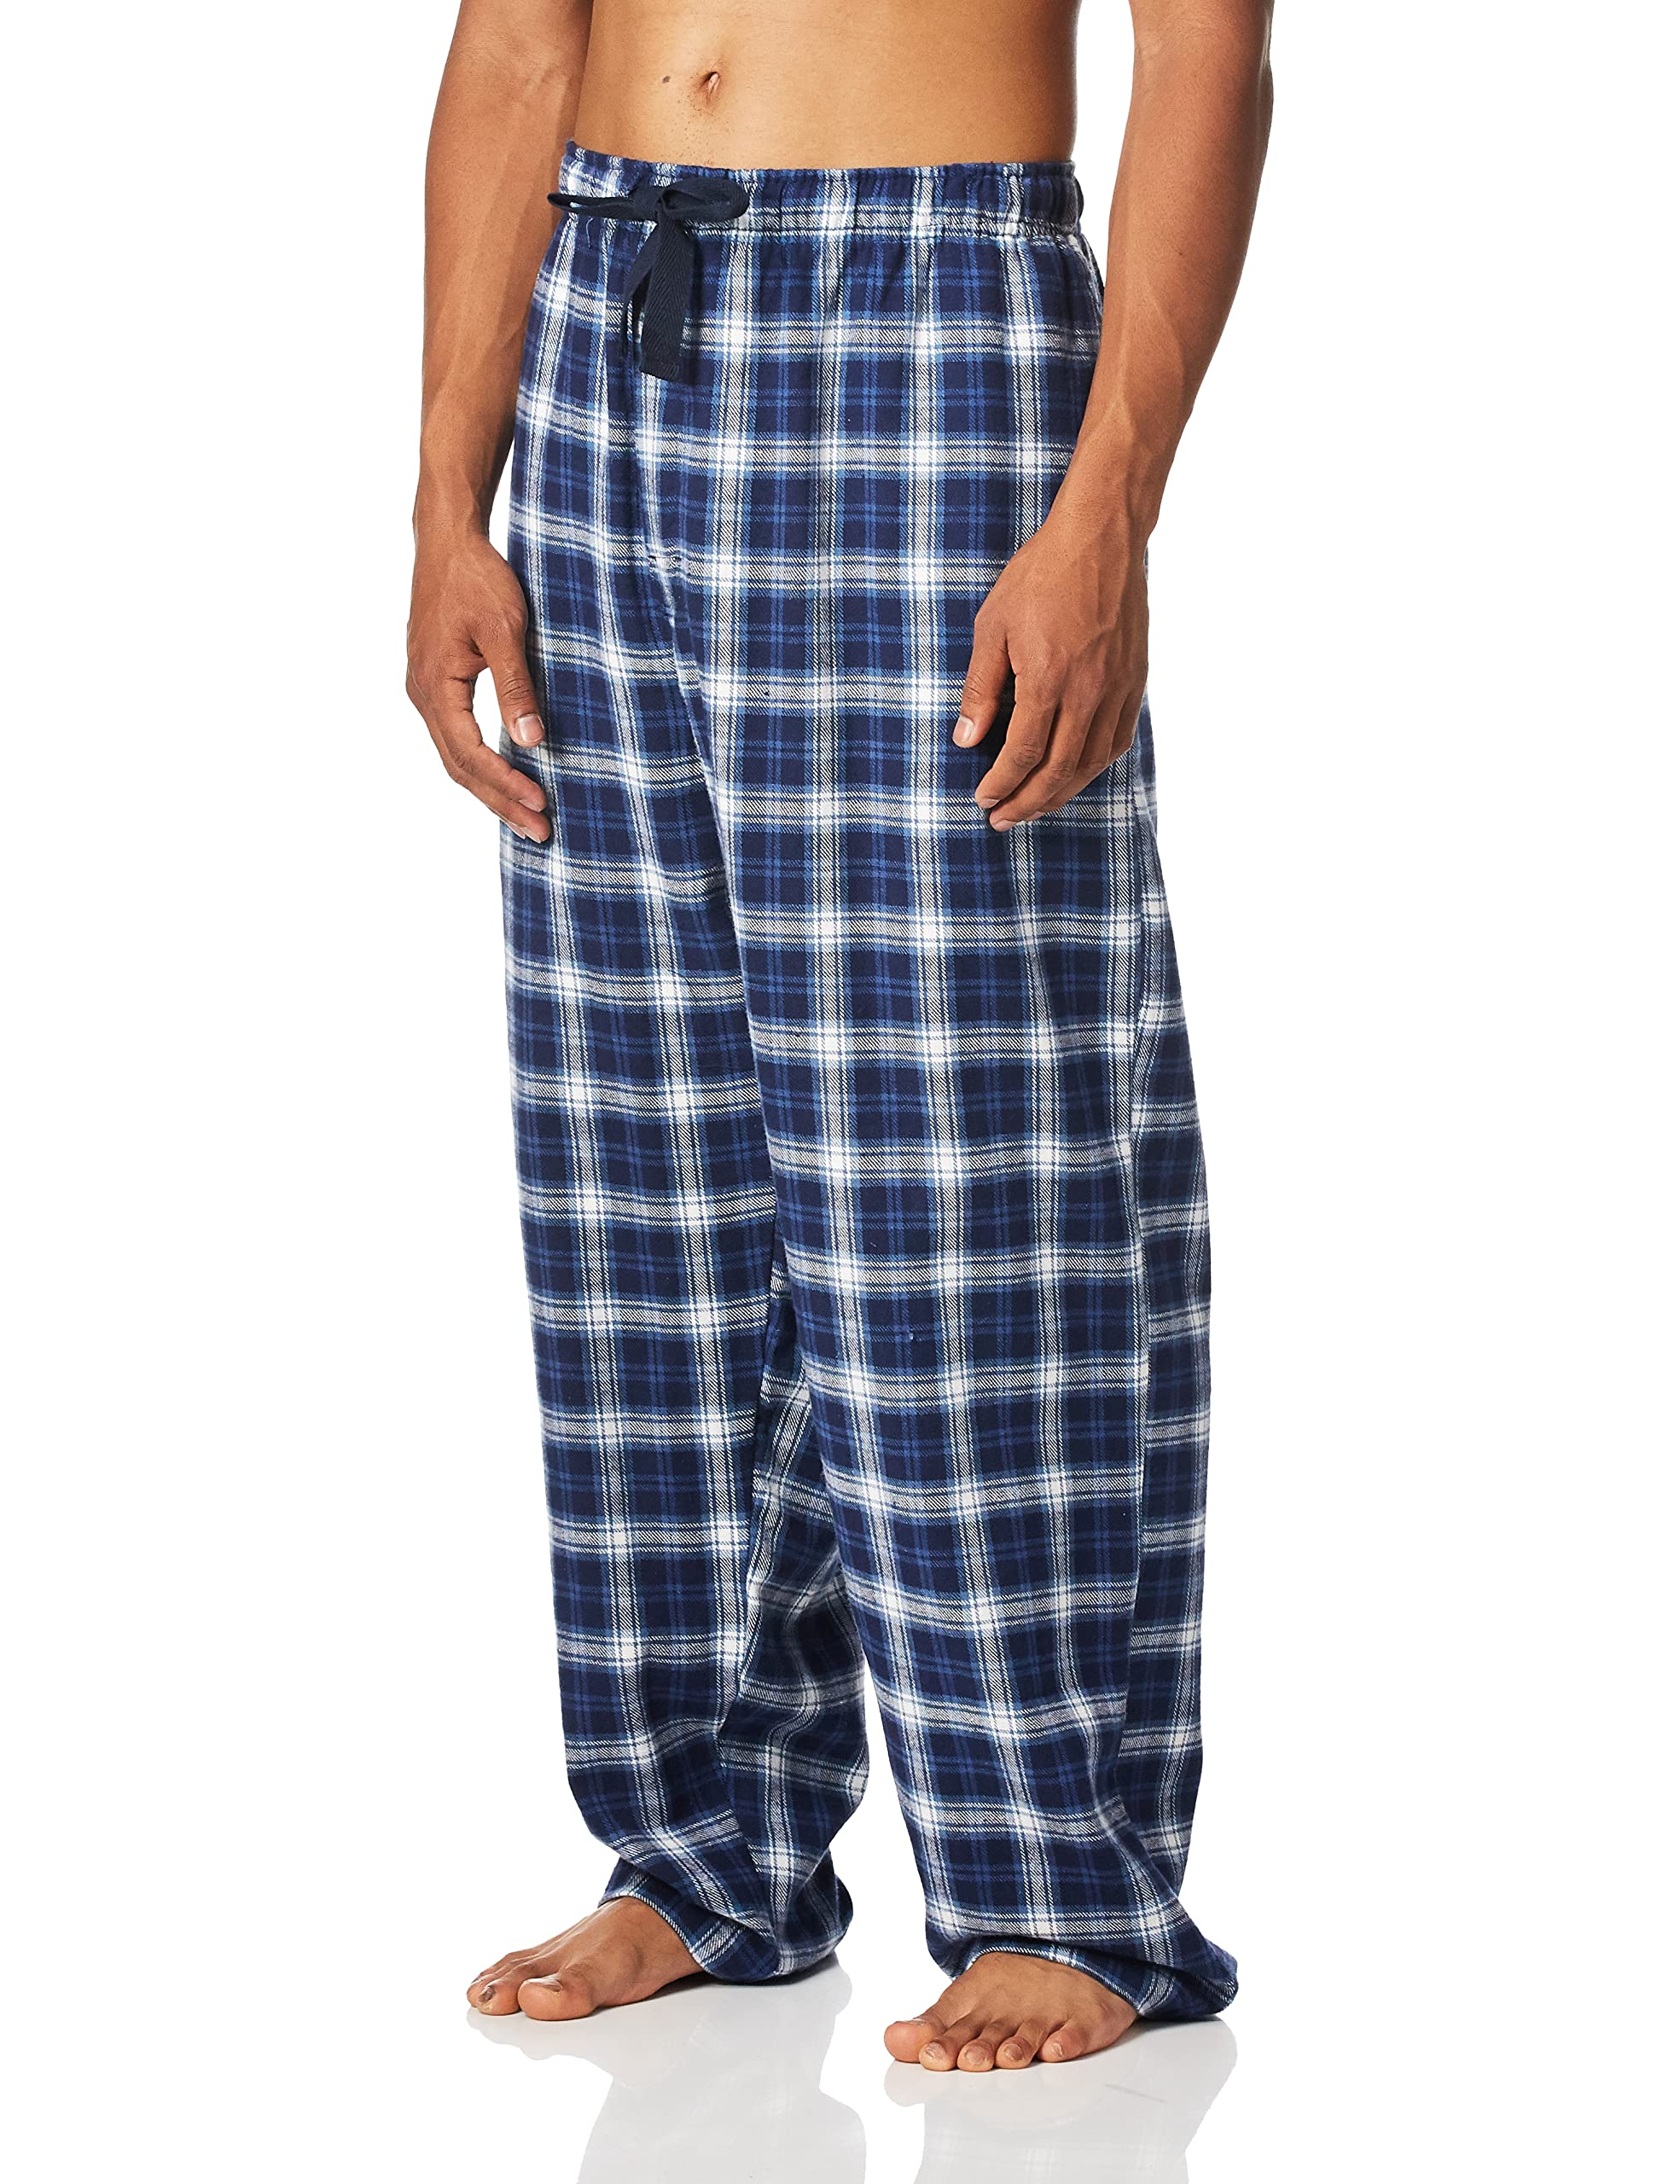 Fruit of the Loom mens Woven Sleep Pajama Pant